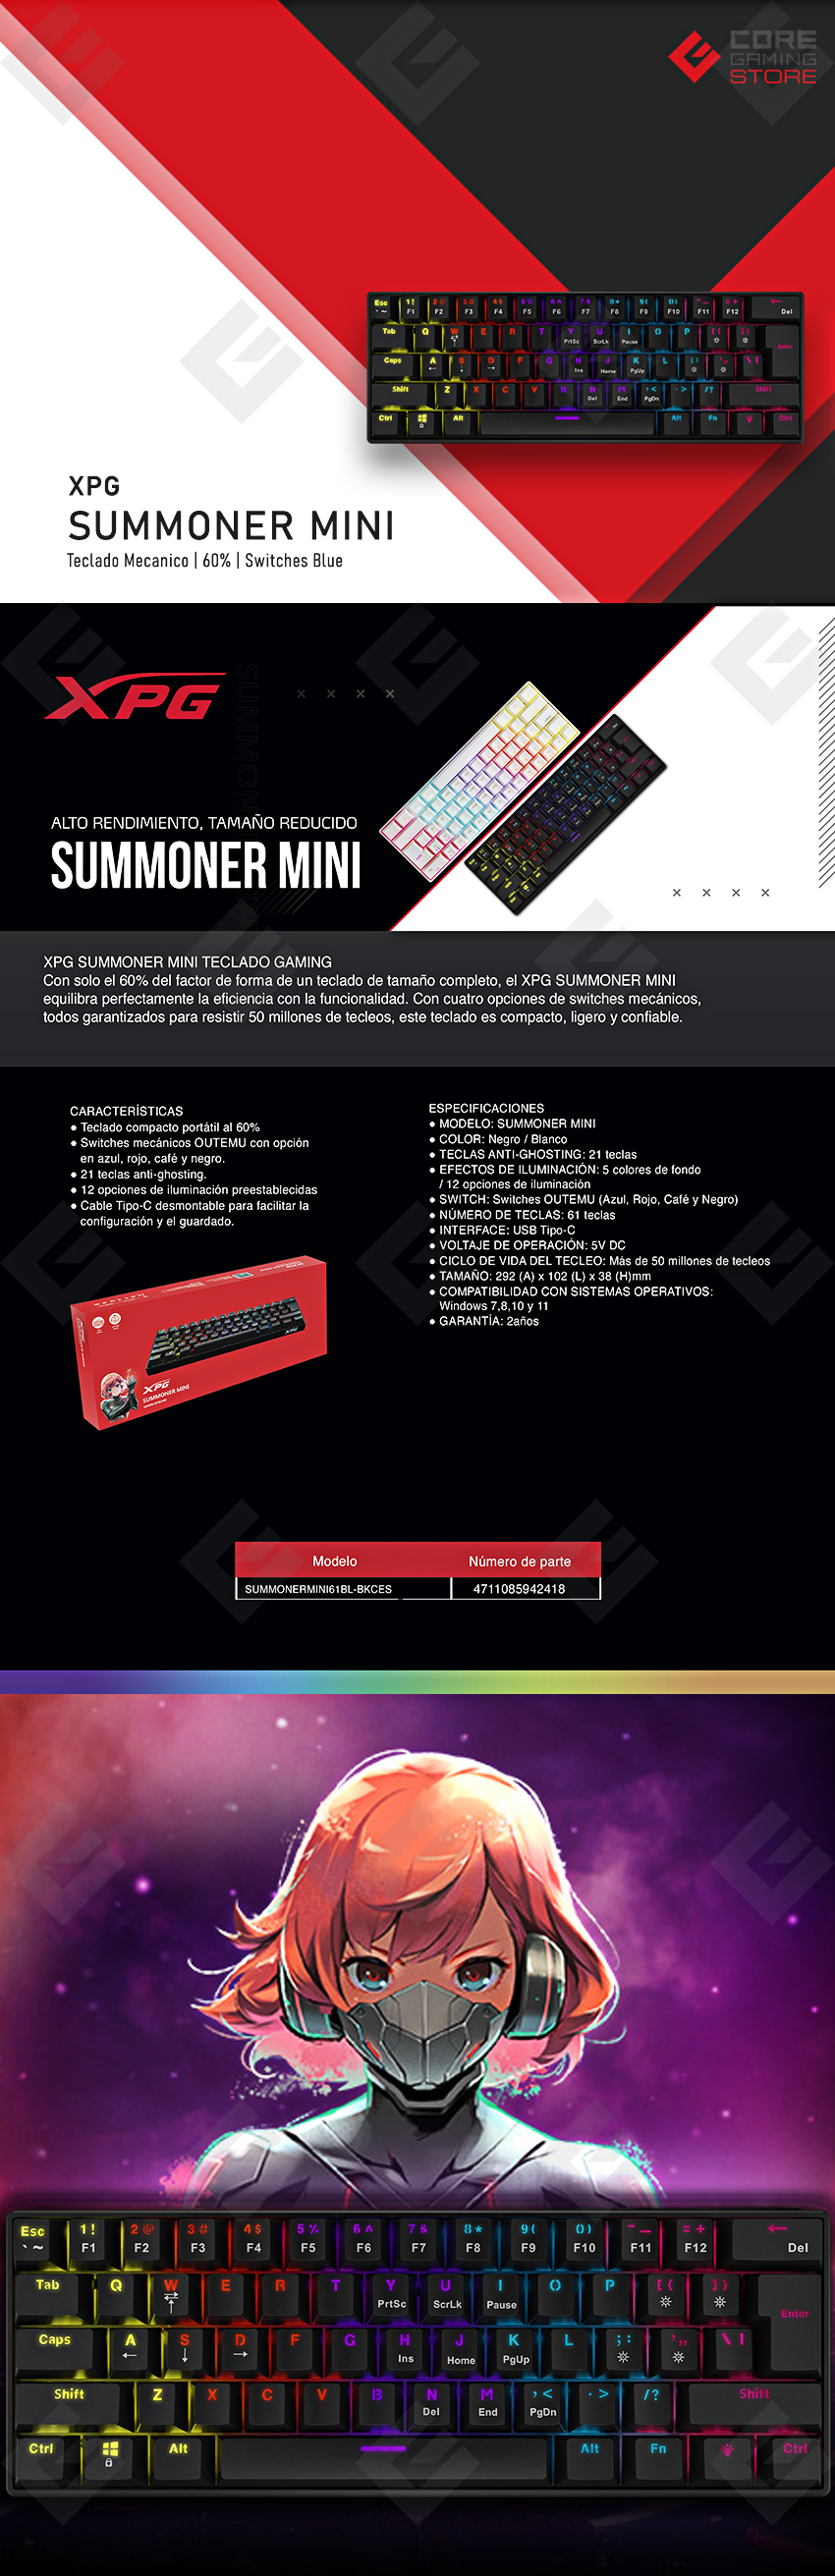 Teclado Gamer Mecanico XPG Summoner Mini | Negro | Switches Outemu Blue | 60% - SUMMONERMINI61BL-BKCES